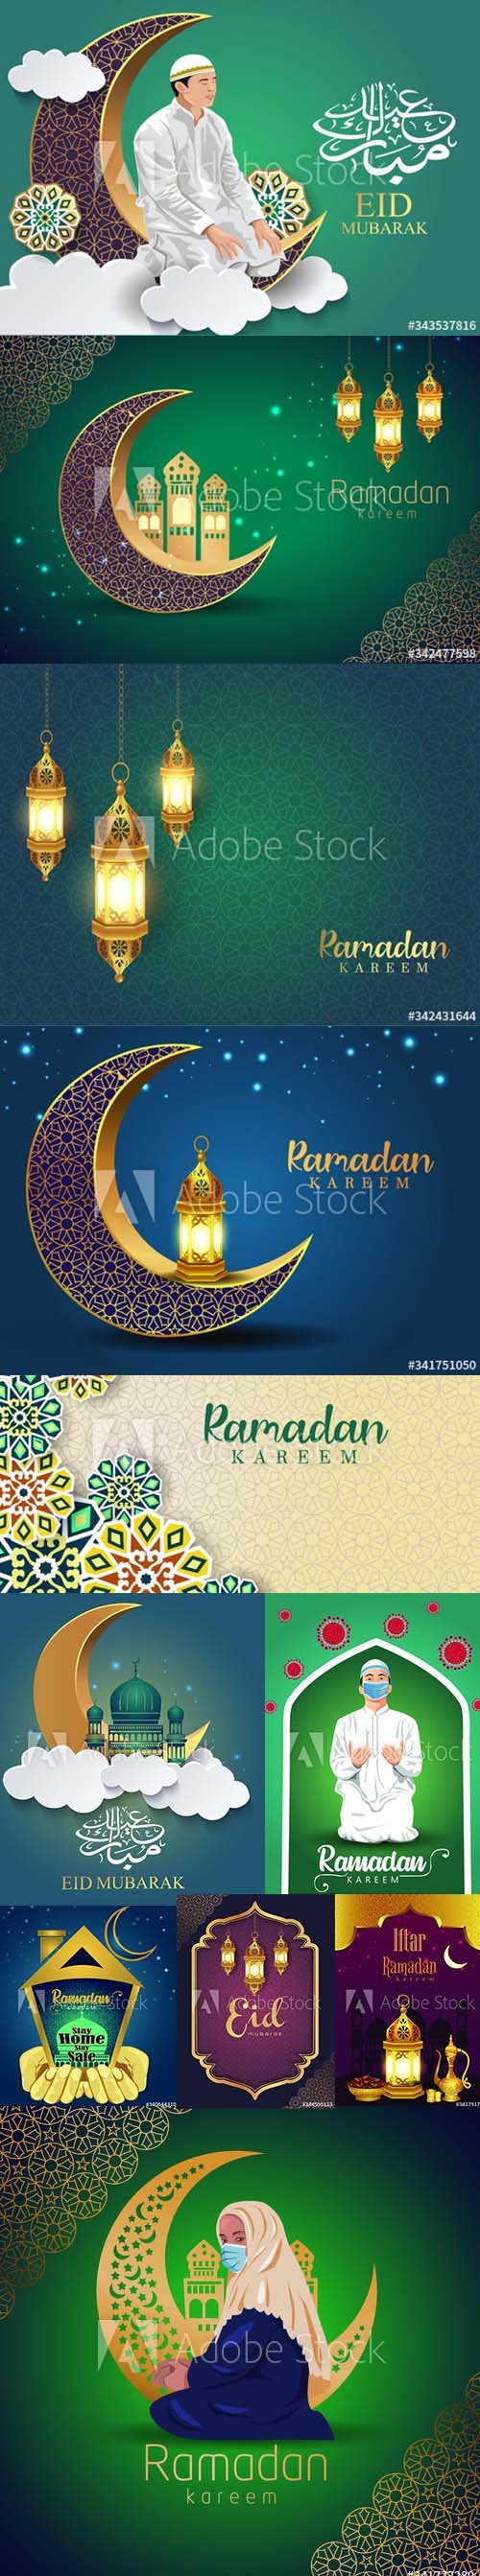 Ramadan Kareem vector illustration set. Corona virus concept Vol 2